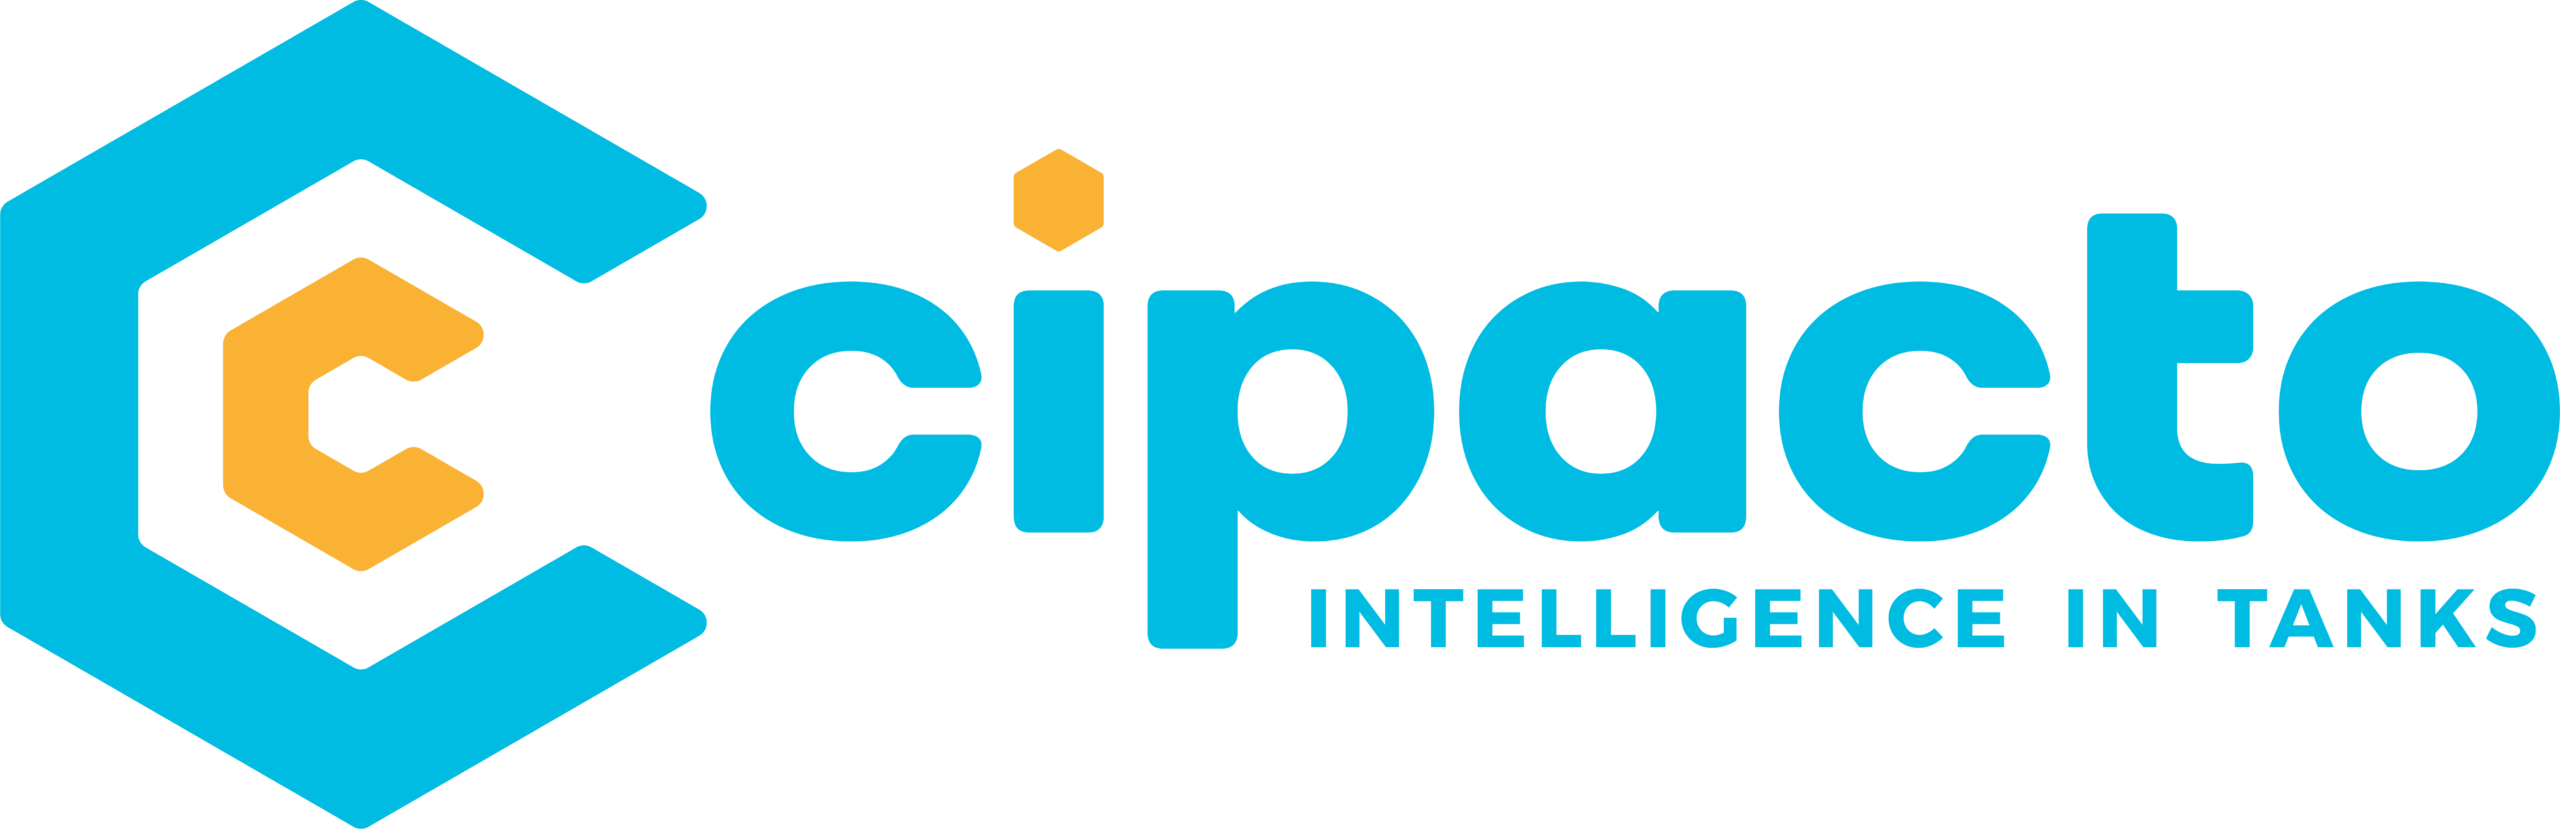 Cipacto Logo tag-line-tti - - complete screen optimised